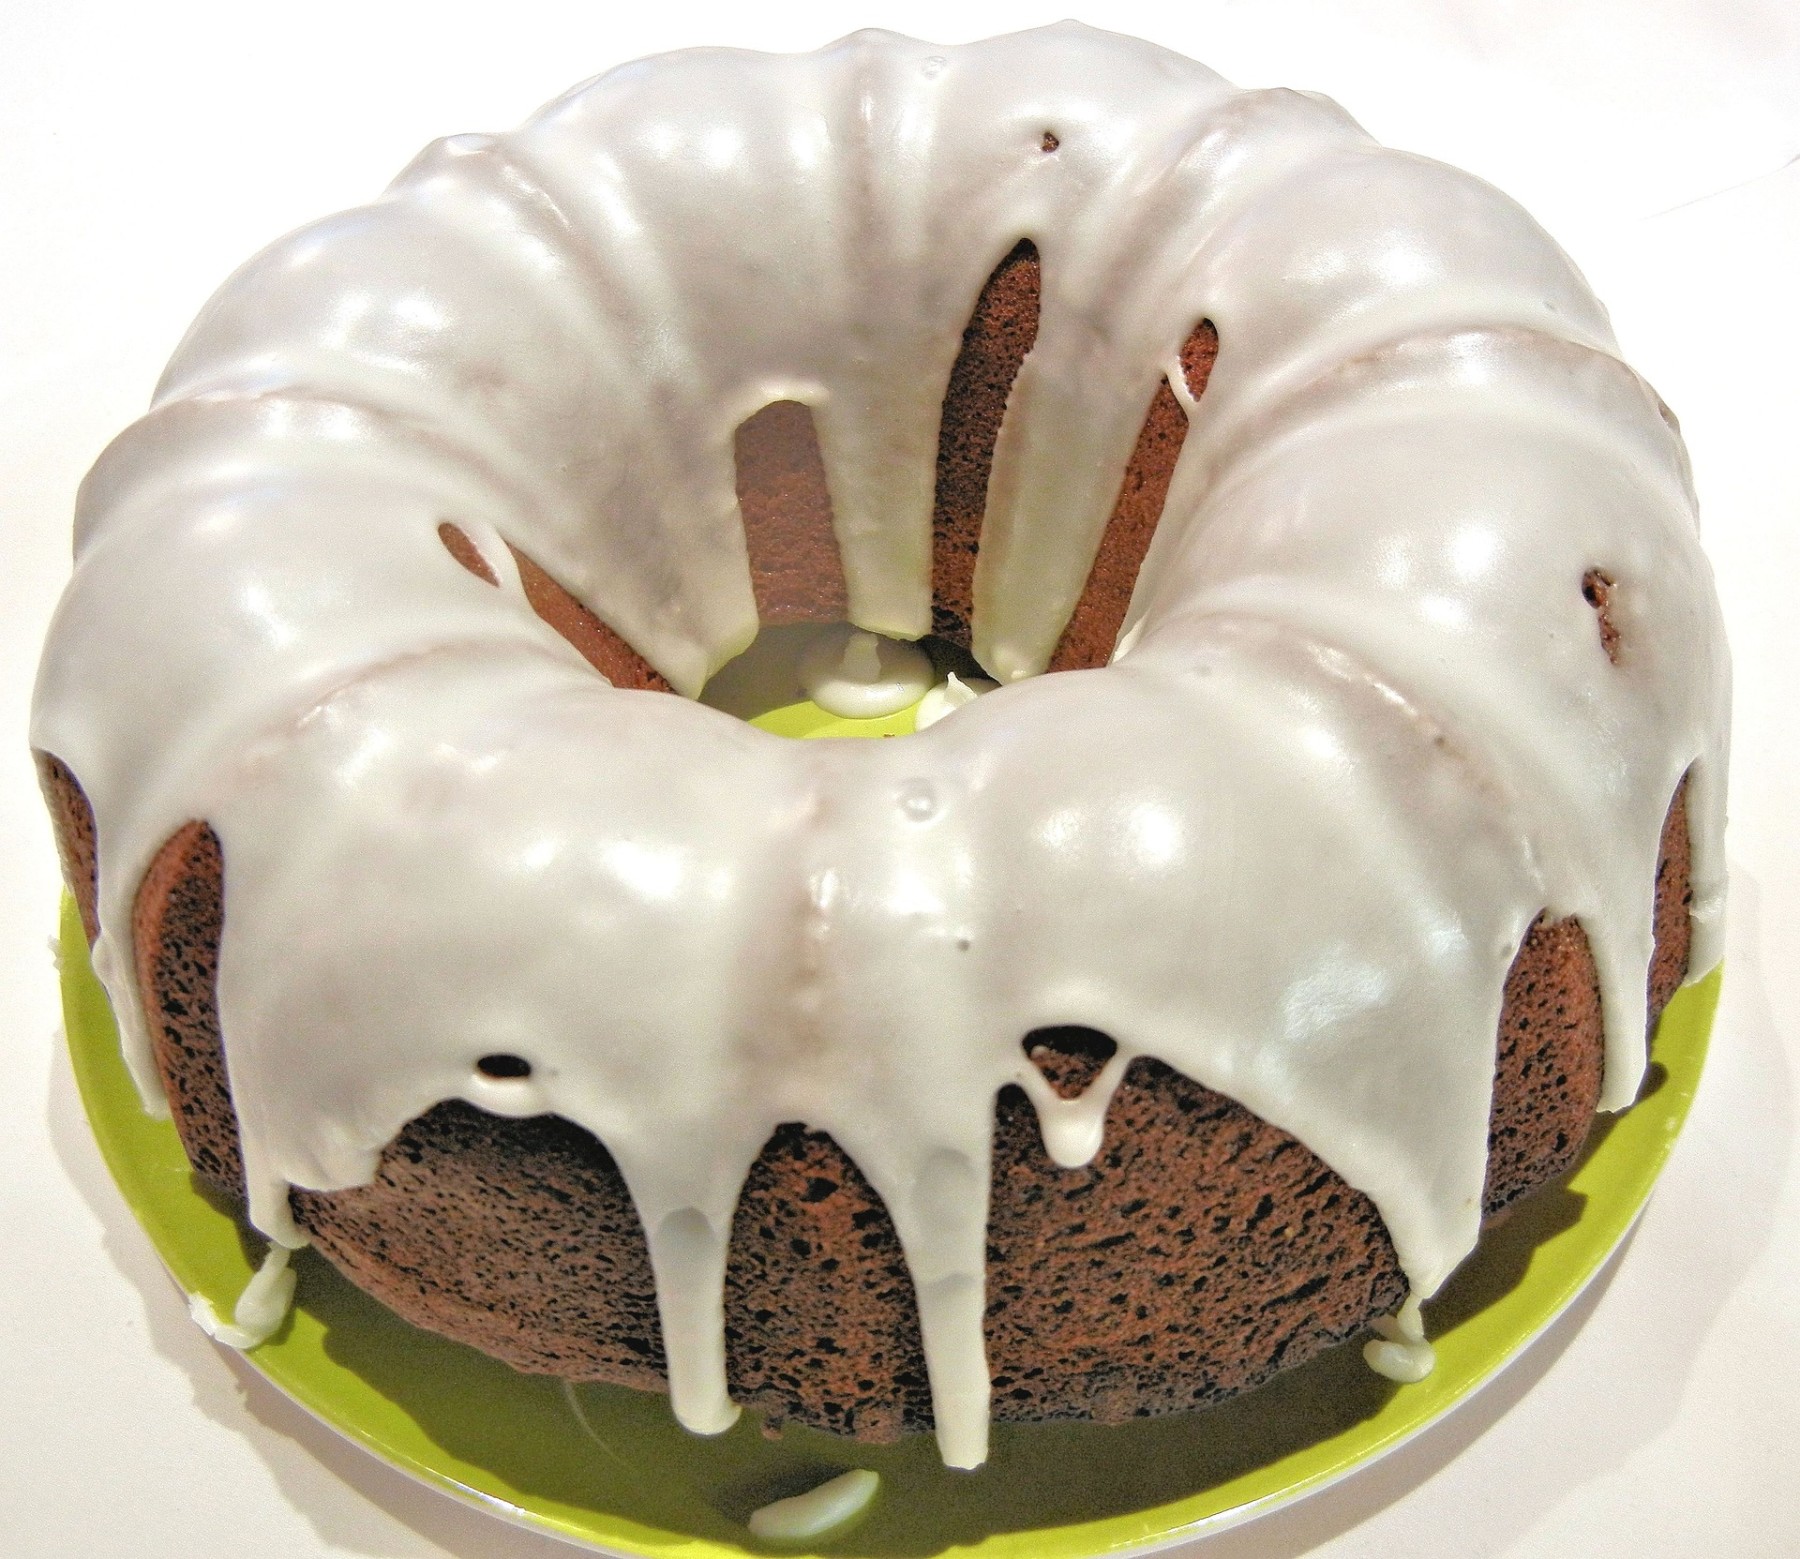 chocolate-bundt-cake-627997_1920